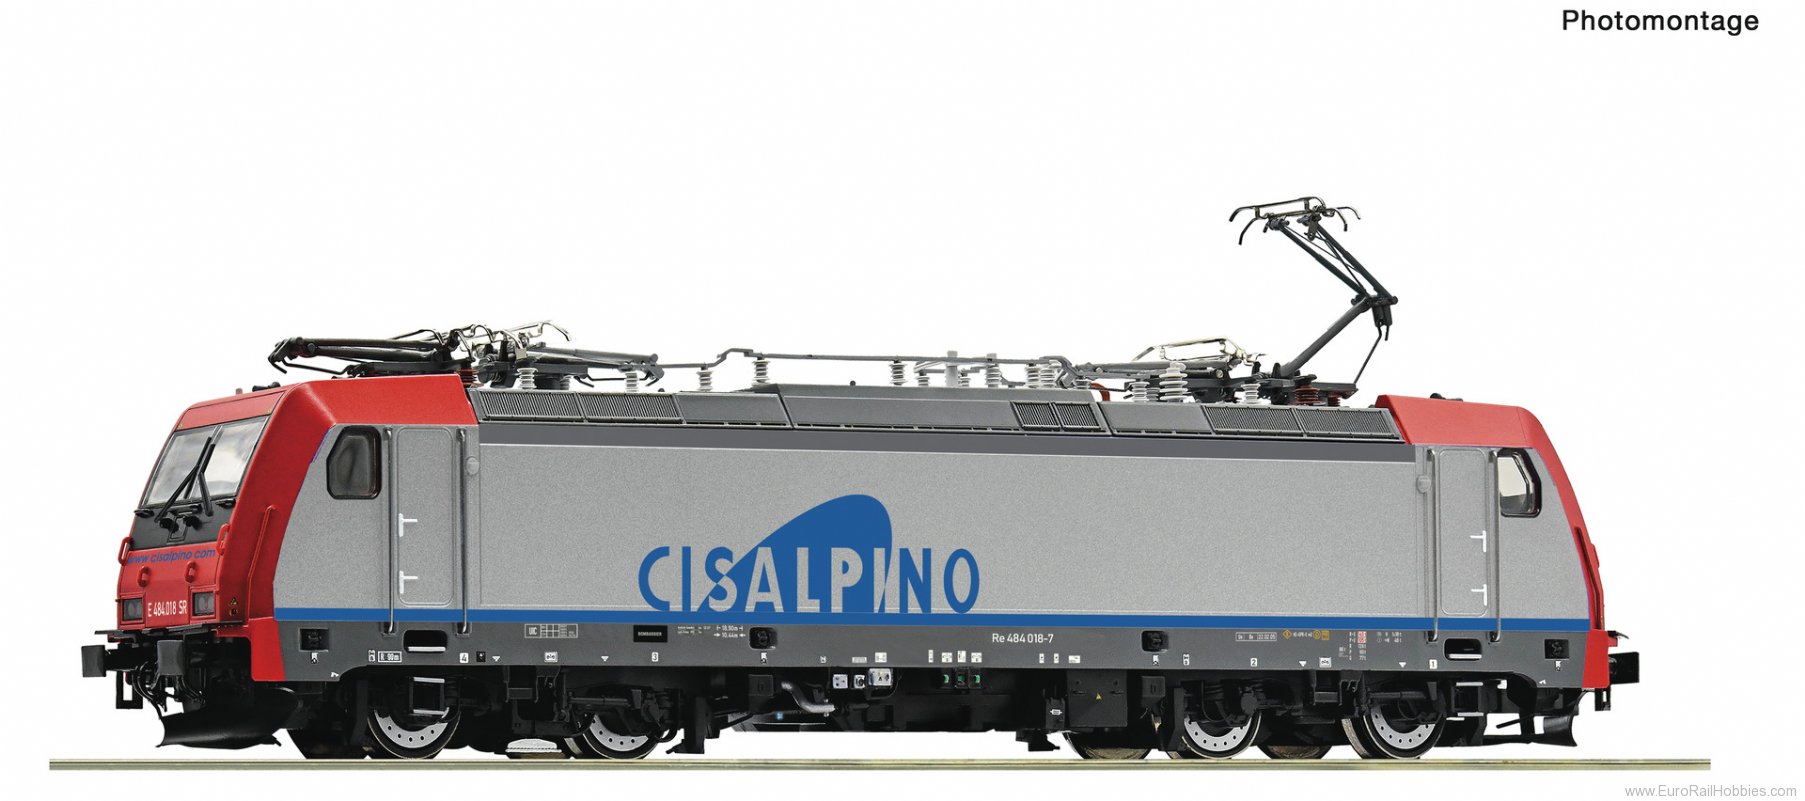 Roco 7510031 Electric locomotive Re 484 018-7, Cisalpino (